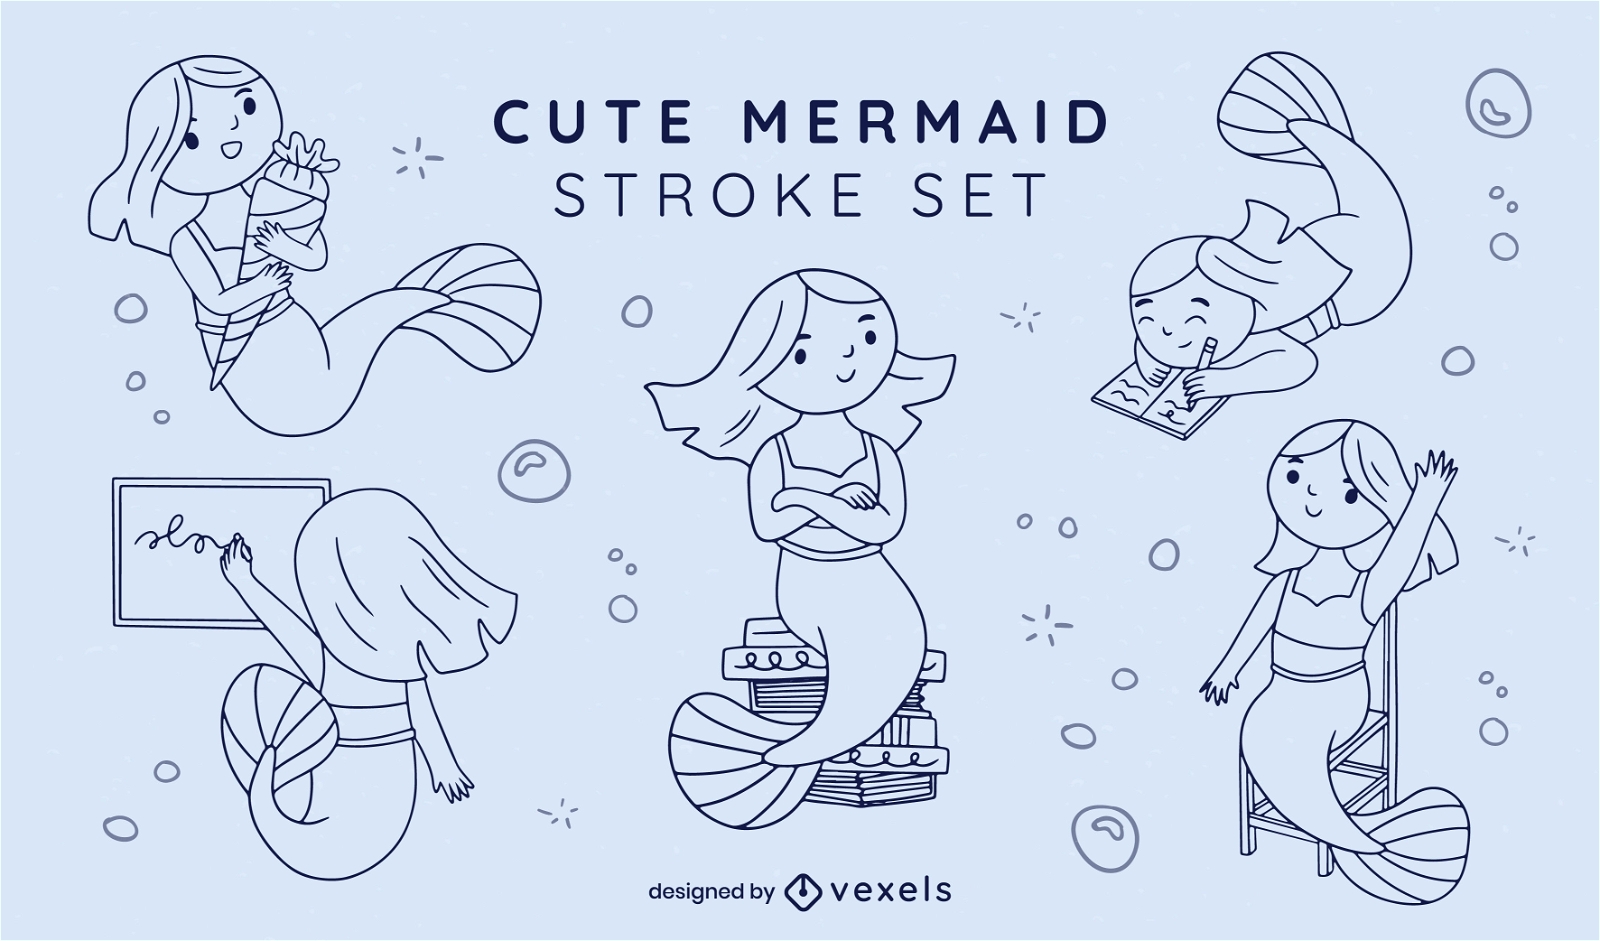 Adorable mermaid student stroke set